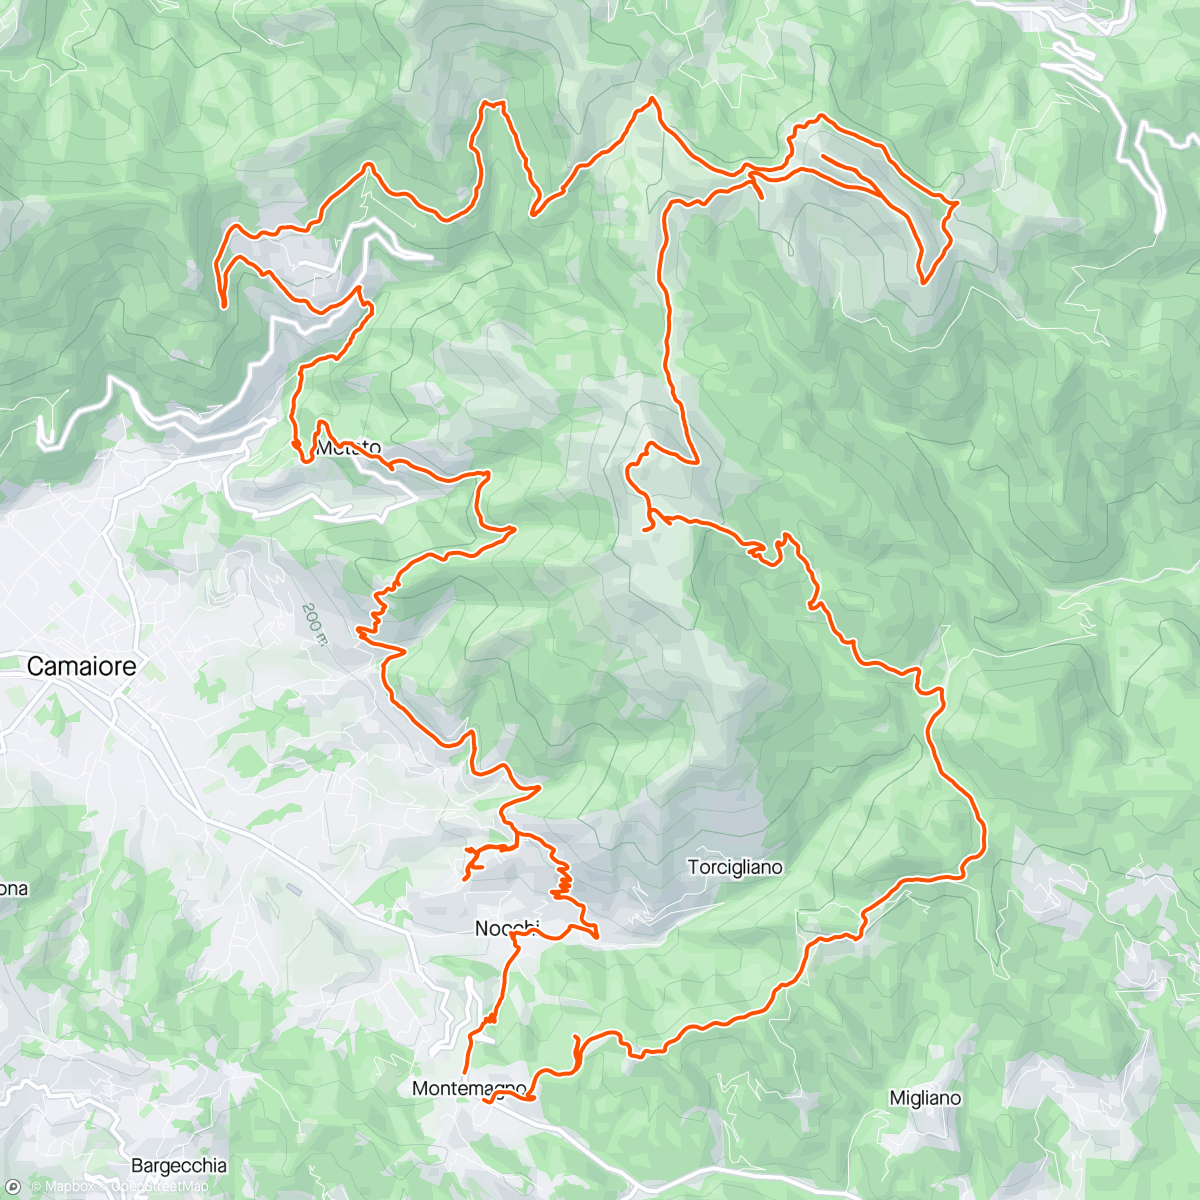 Map of the activity, Maratona Alpi Apuane Meridionali e traversata frazioni Camaioresi Vette M.Prano M.Prana M.Piglione ⛰️⛰️⛰️🔝🔝🔝💪🏼🤙🏻